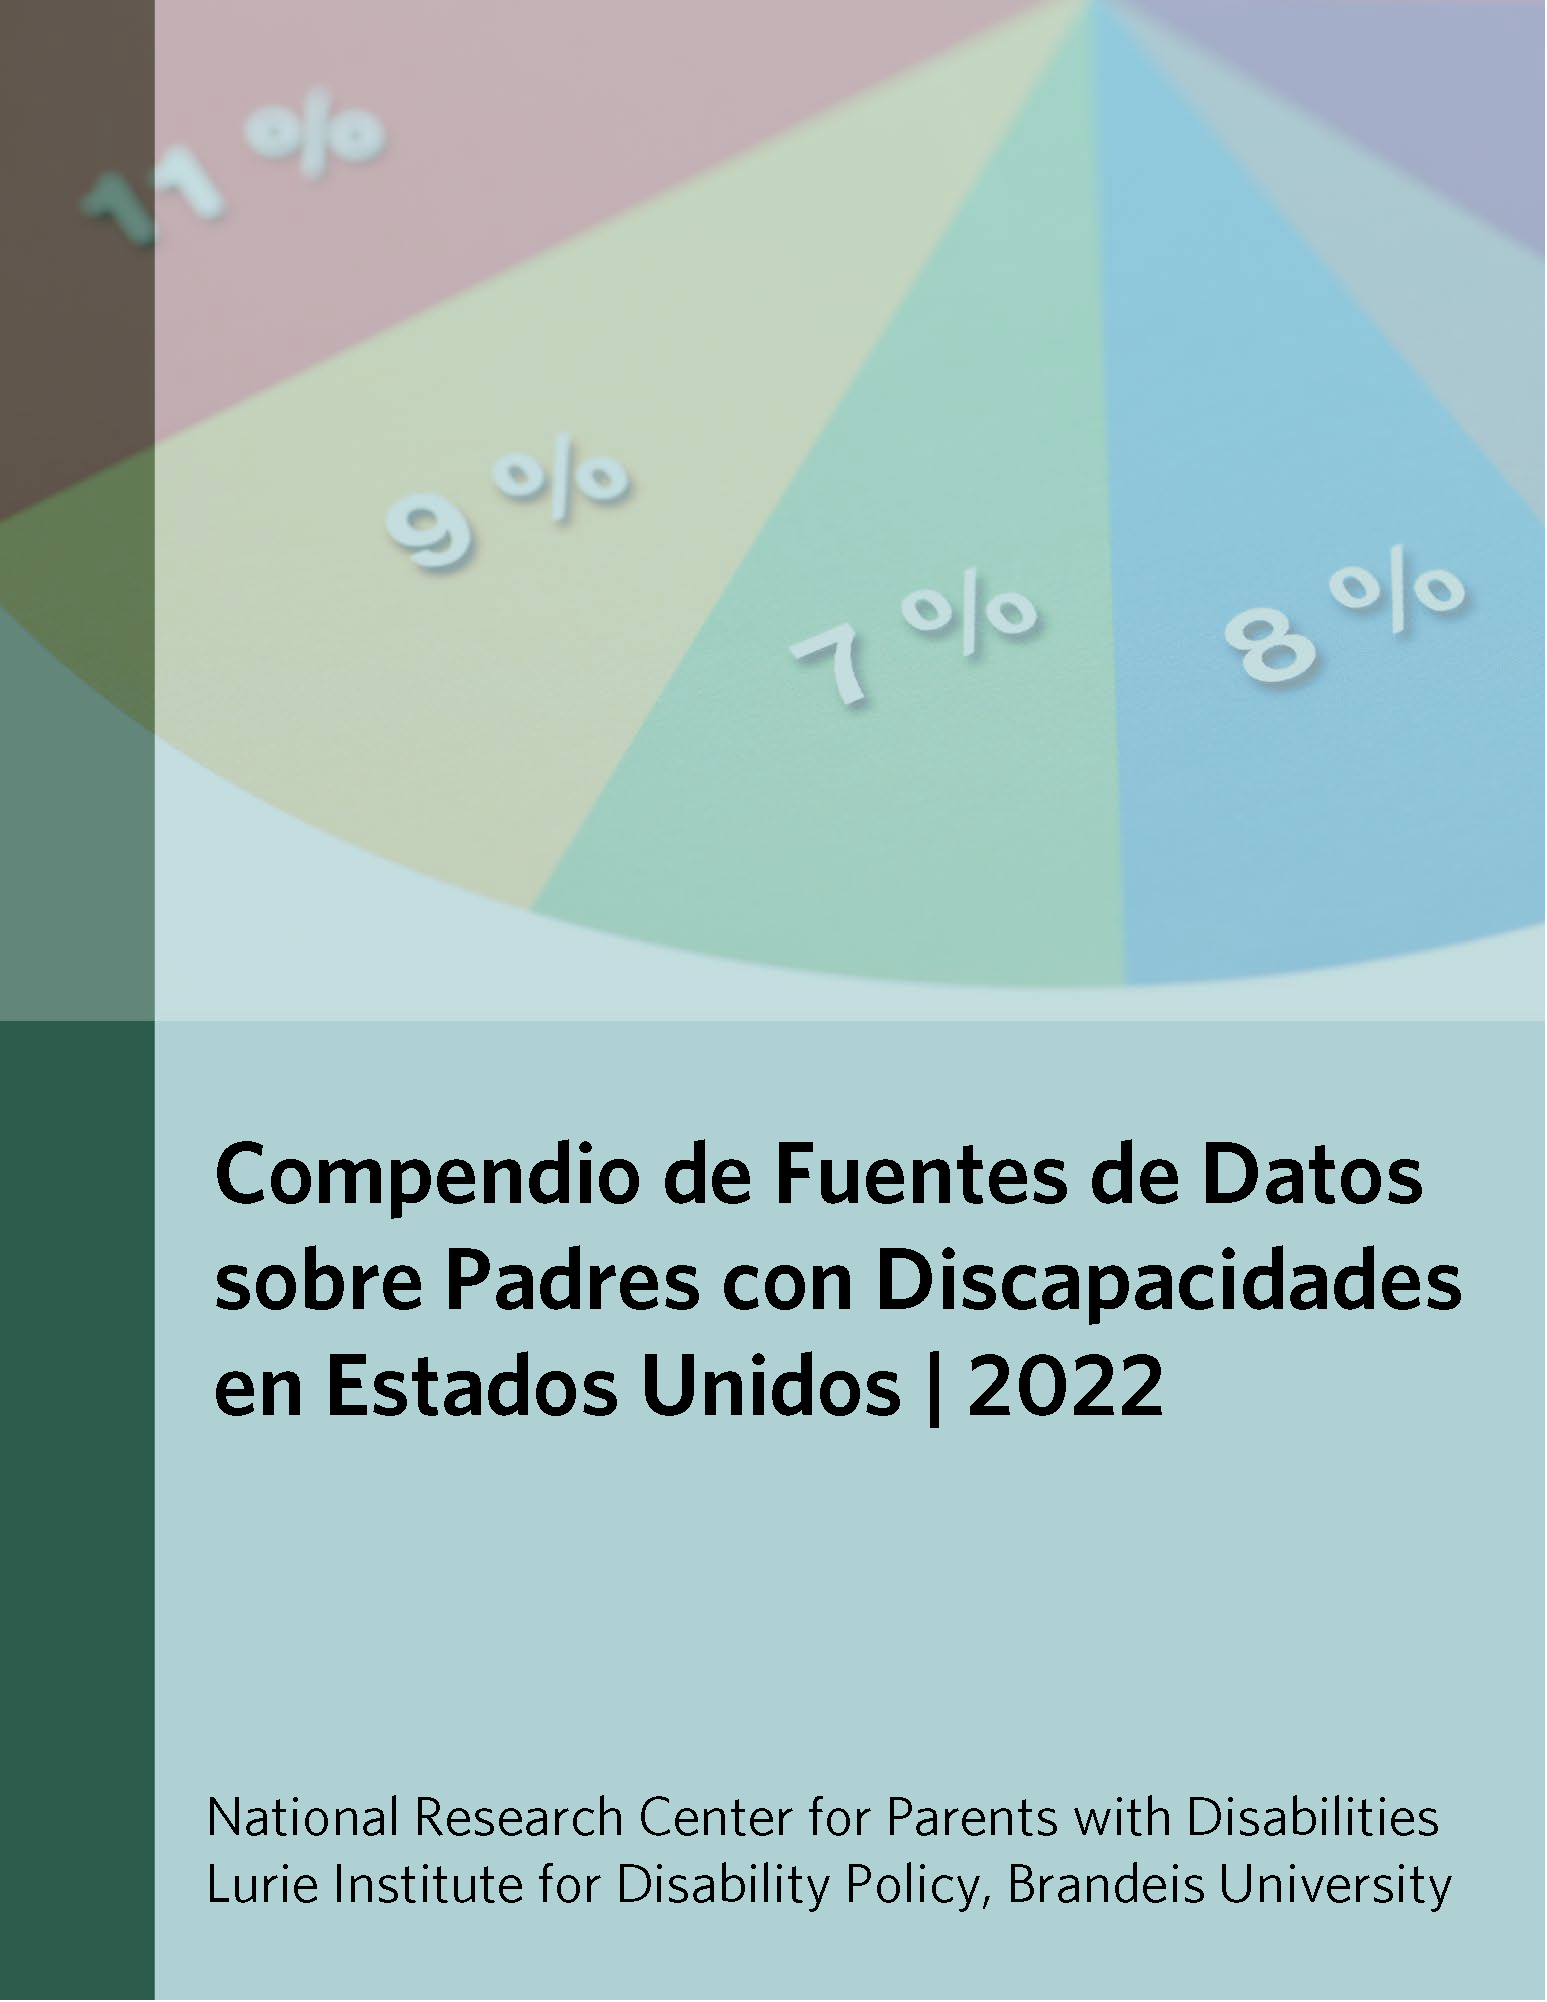 Data Compendium 2022: Cover page (Spanish)